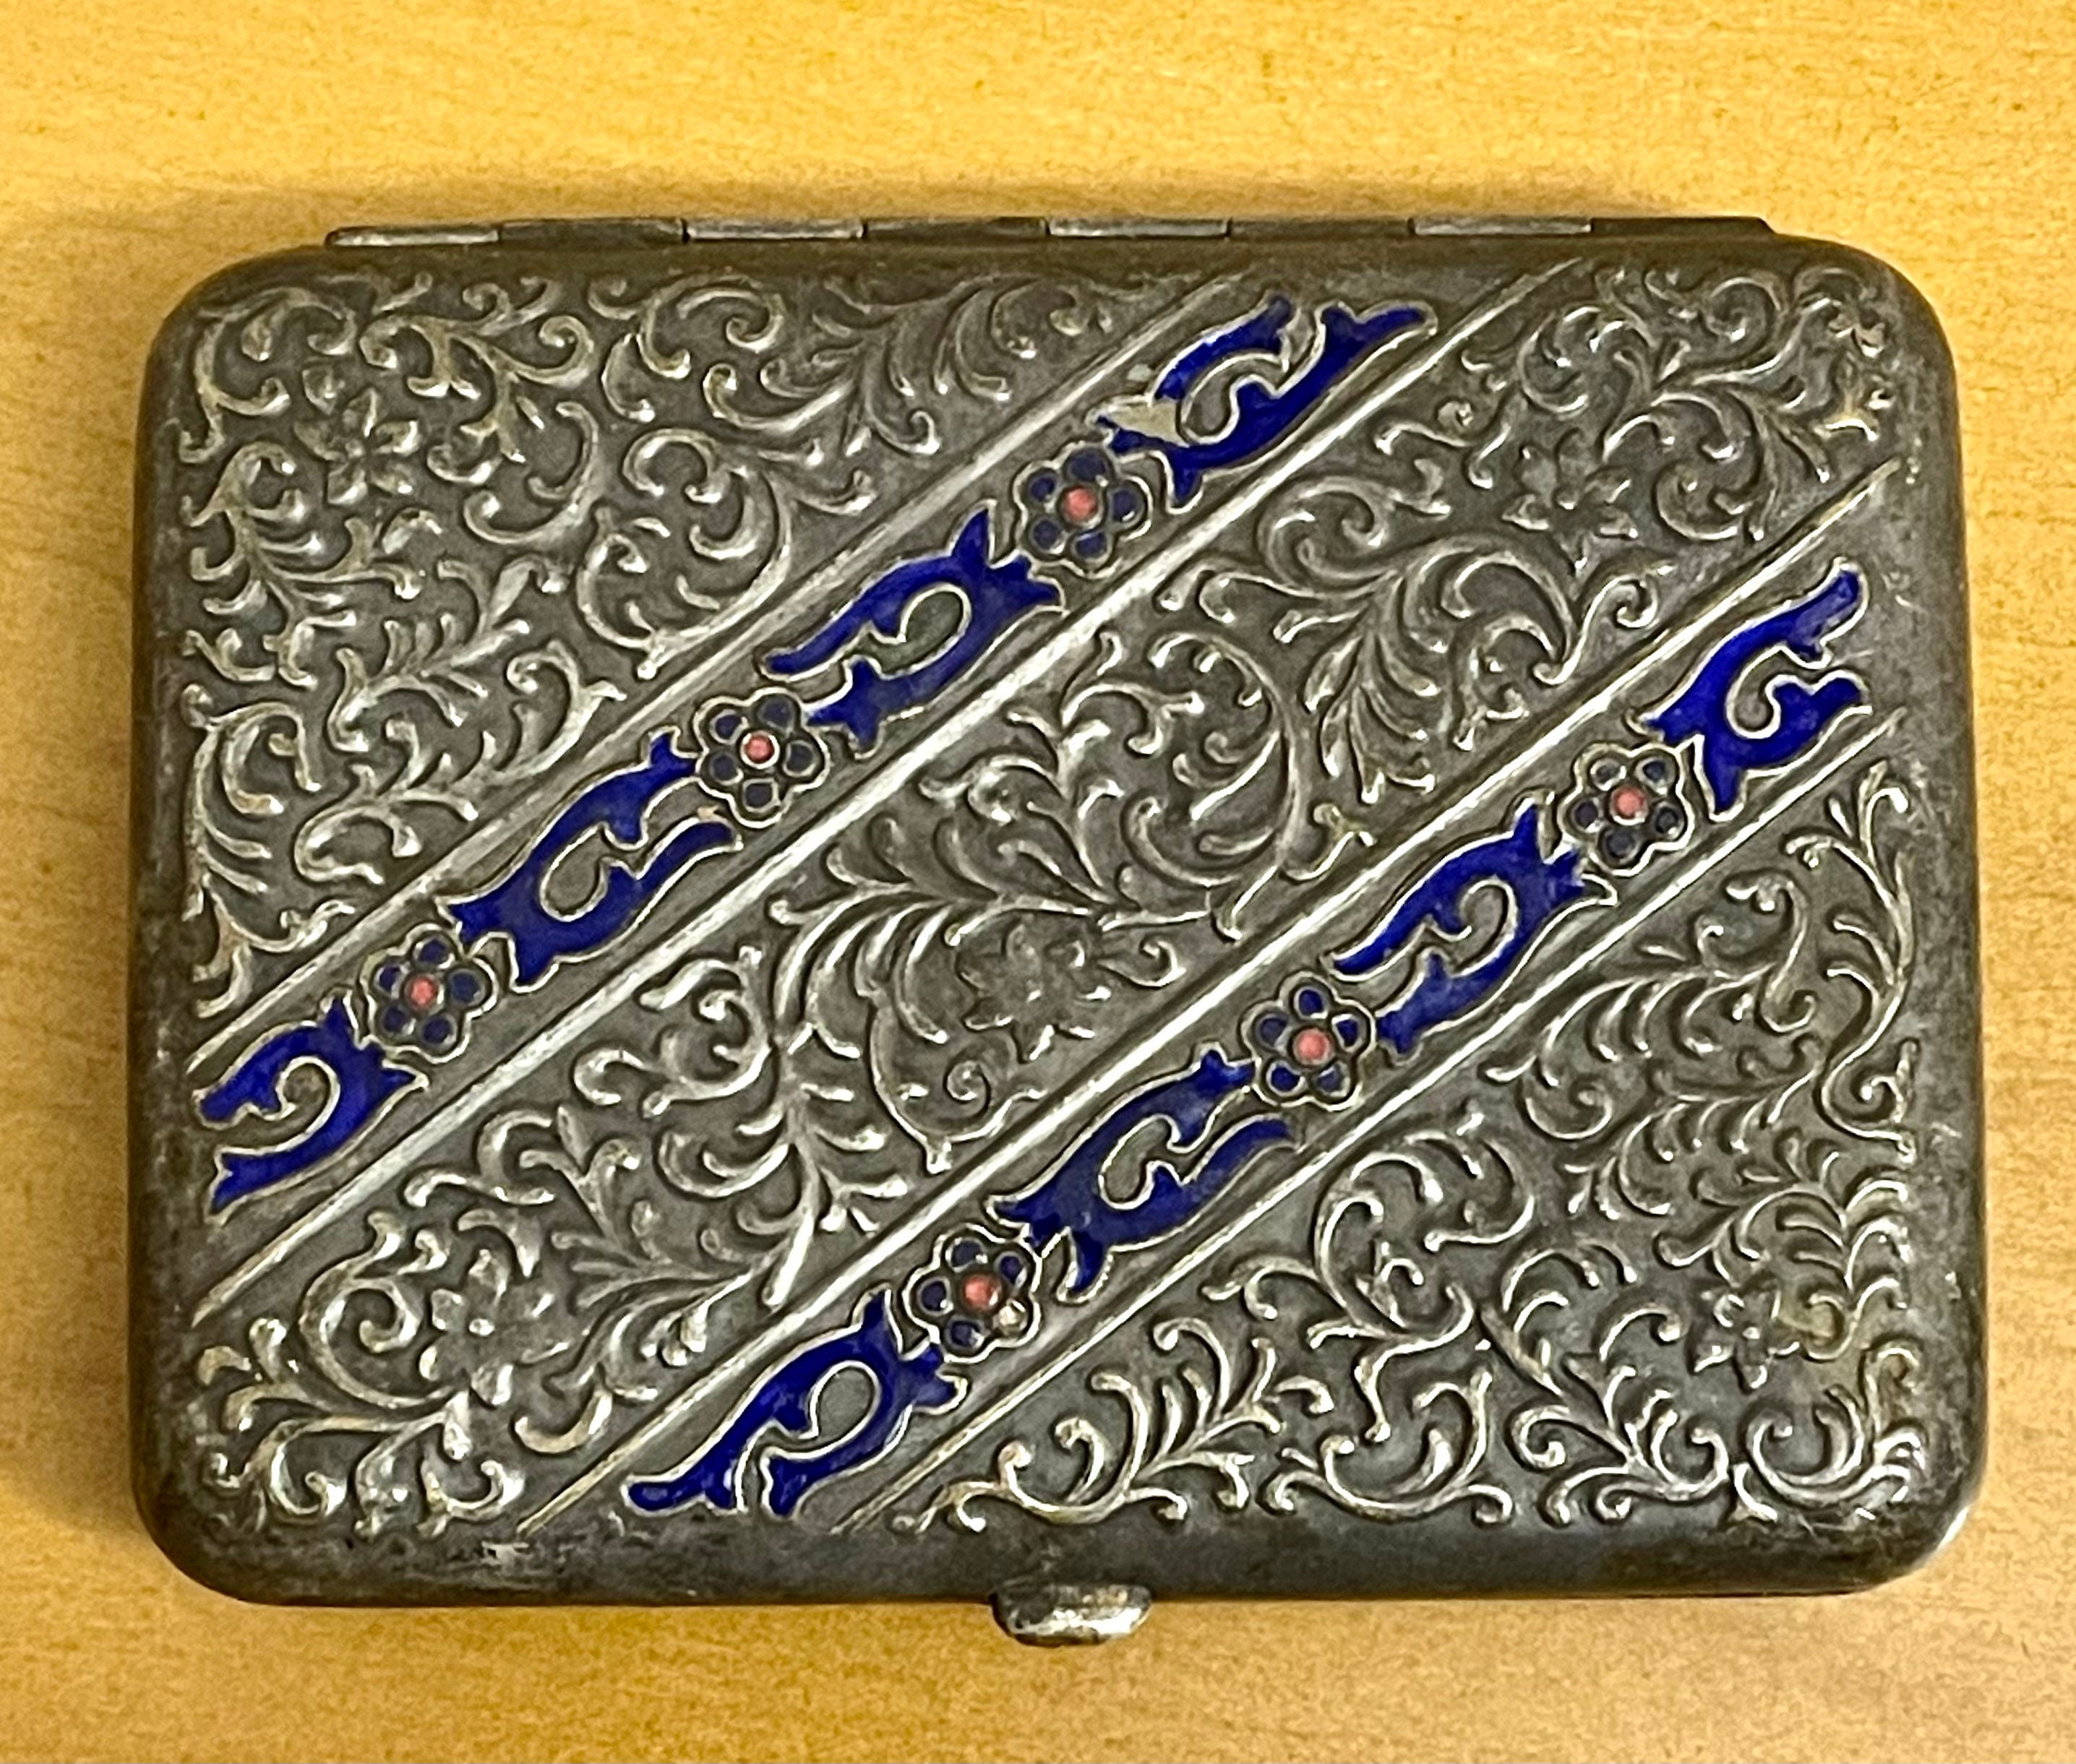  CHICIRIS Metal Cigarette Case, Double Sided Vintage